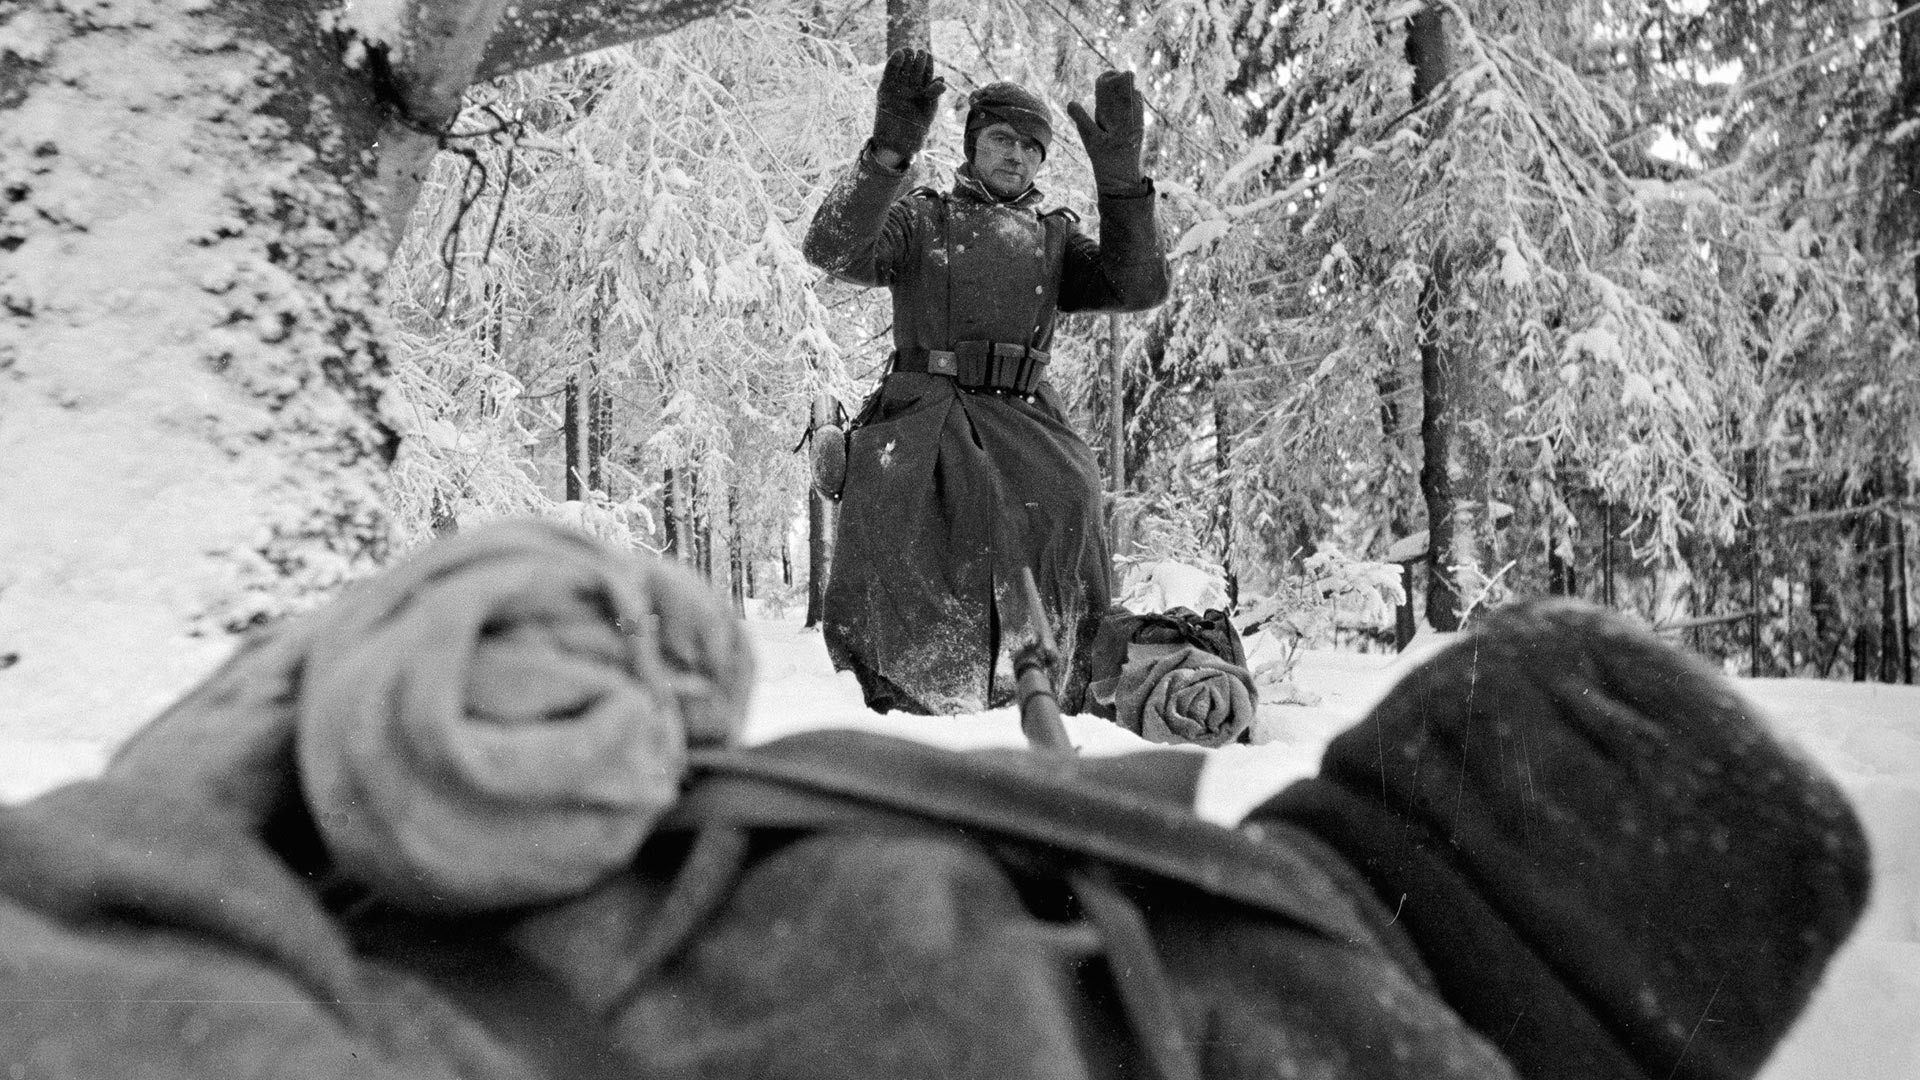 Njemački vojnik se predaje, rajon Solnečnogorska, 1. prosinca 1941.

